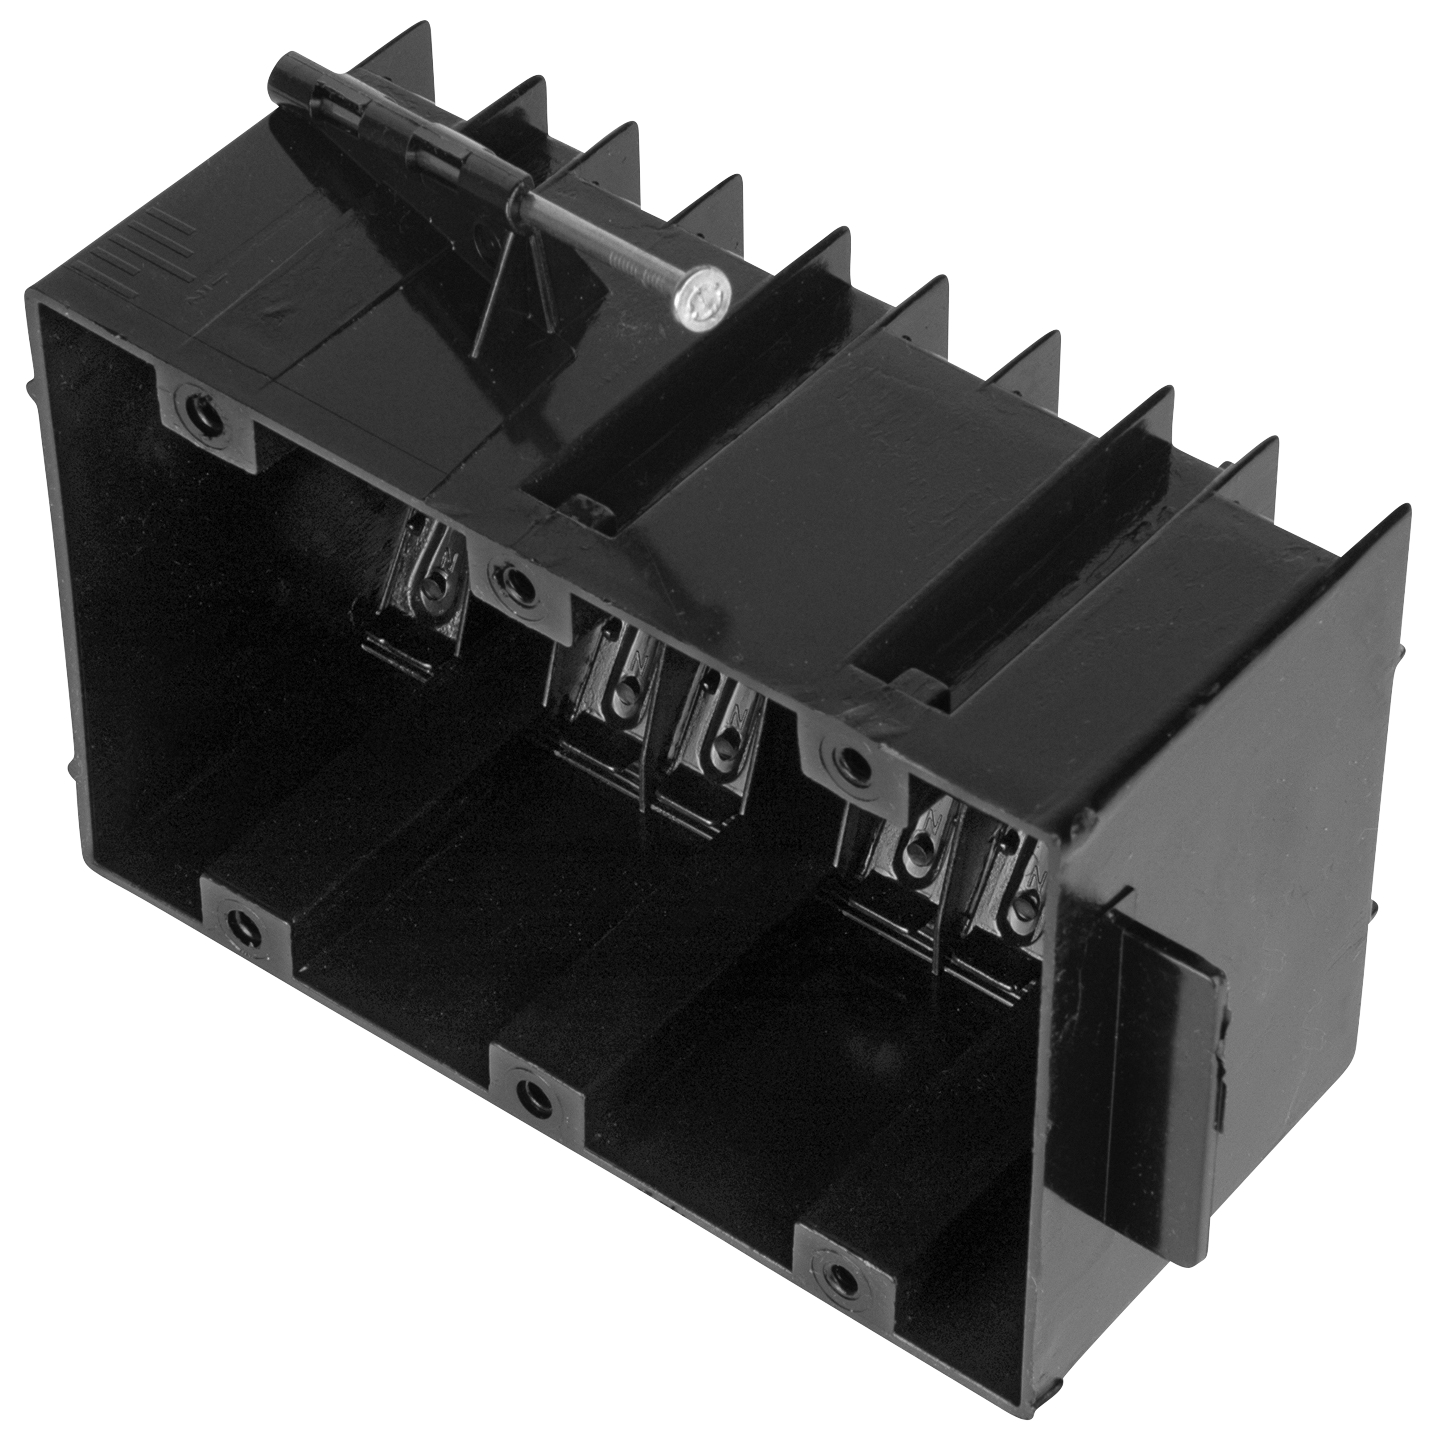 345-N Non-Metallic Outlet Box Carlon;ABB - Installation Products